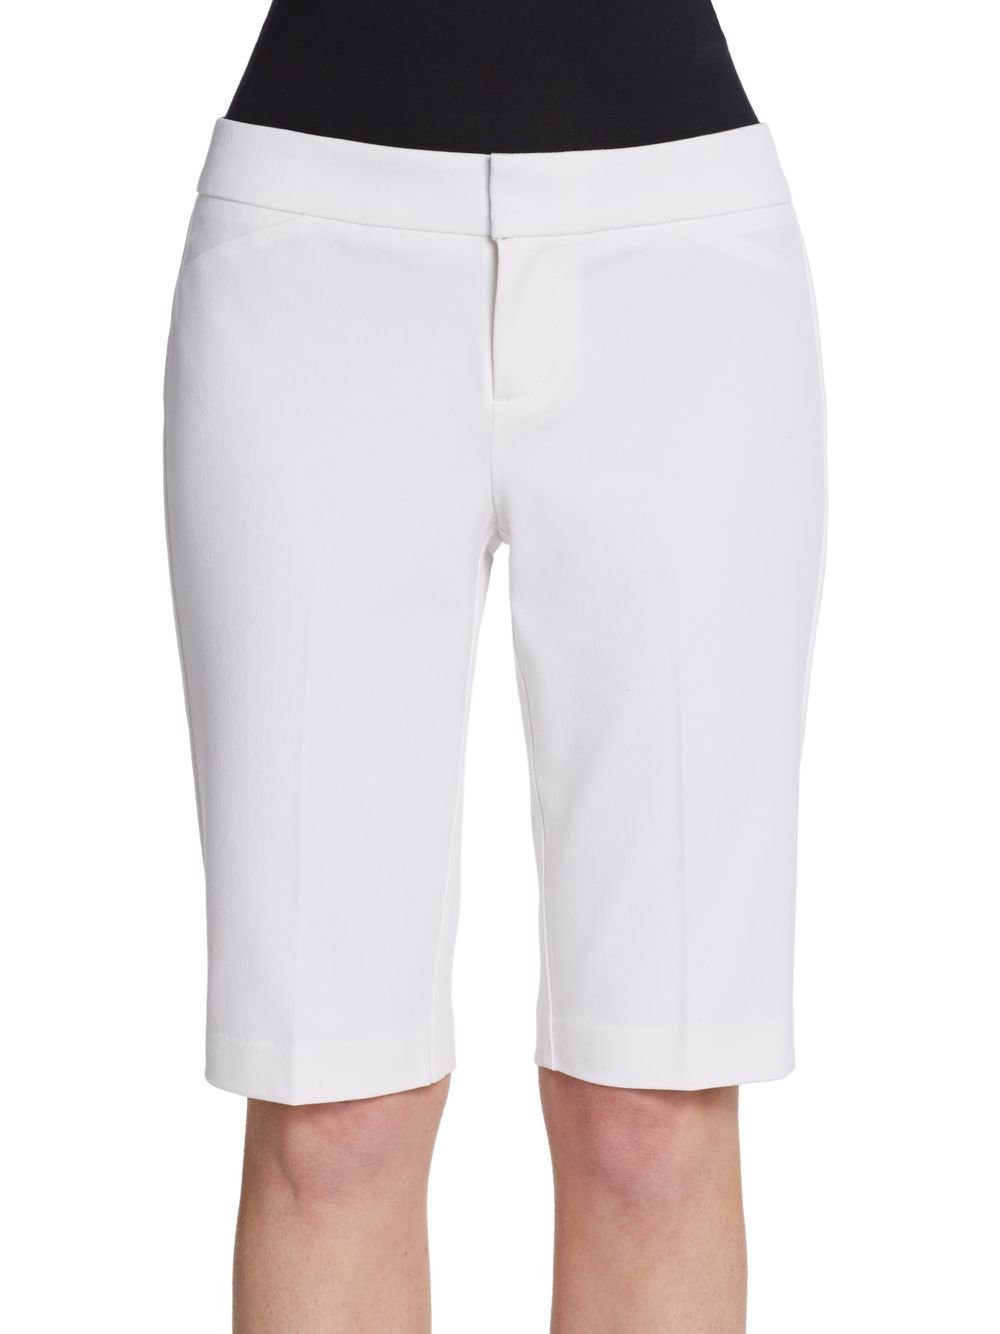 Lyst - Saks Fifth Avenue Black Label Bermuda Dress Shorts in White